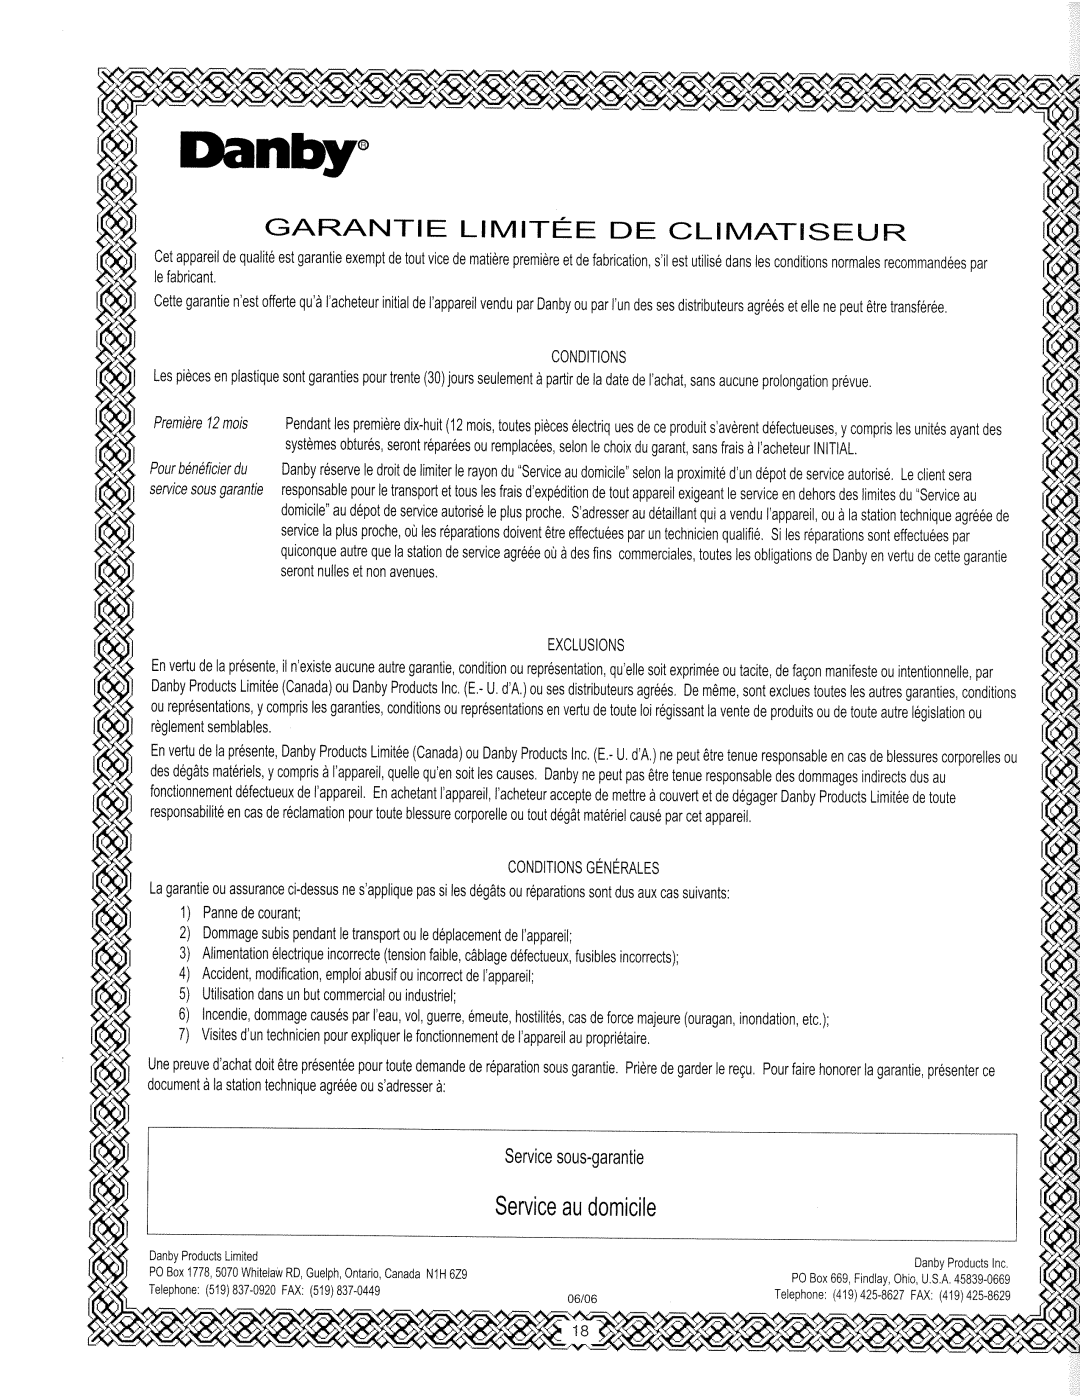 Danby DVAC10038EE, DVAC12038EE manual 